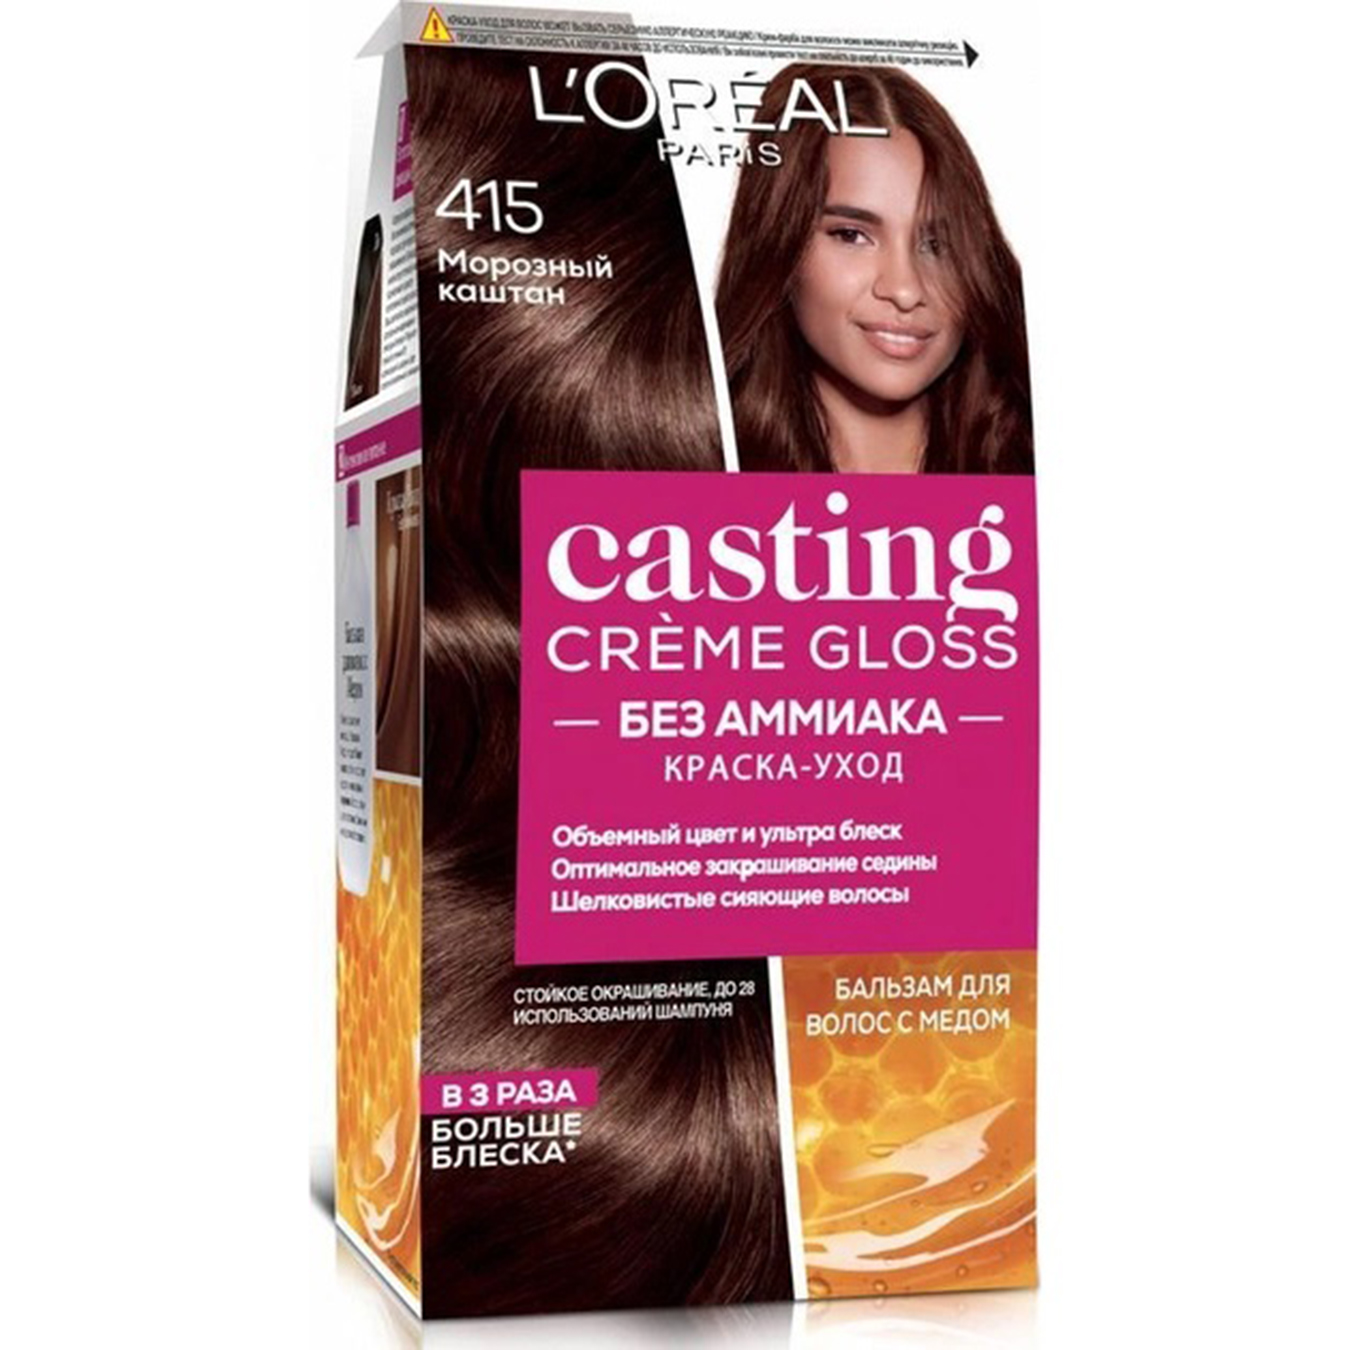 Hair dye Loreal Casting 415 Frosty chestnut